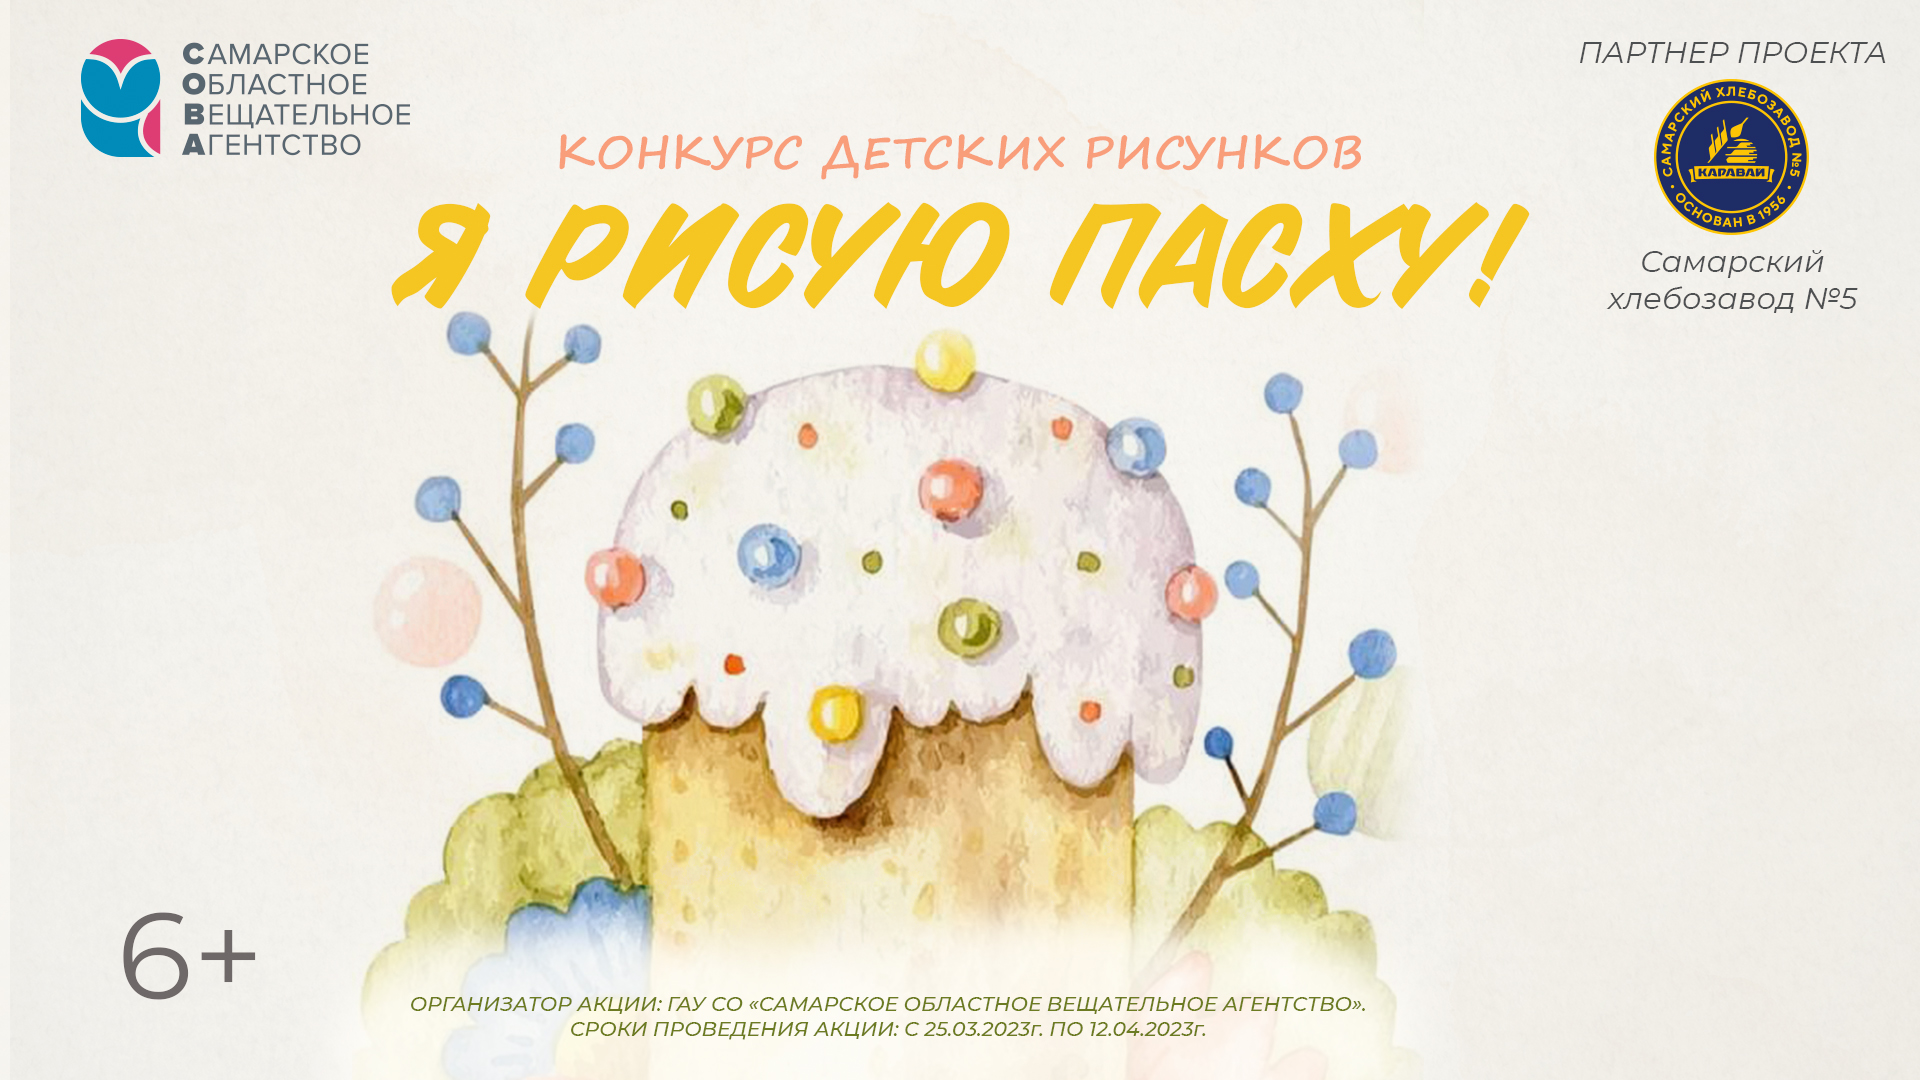 Sovainfo.ru объявляет о старте конкурса детских рисунков "Я рисую Пасху!" (6+)